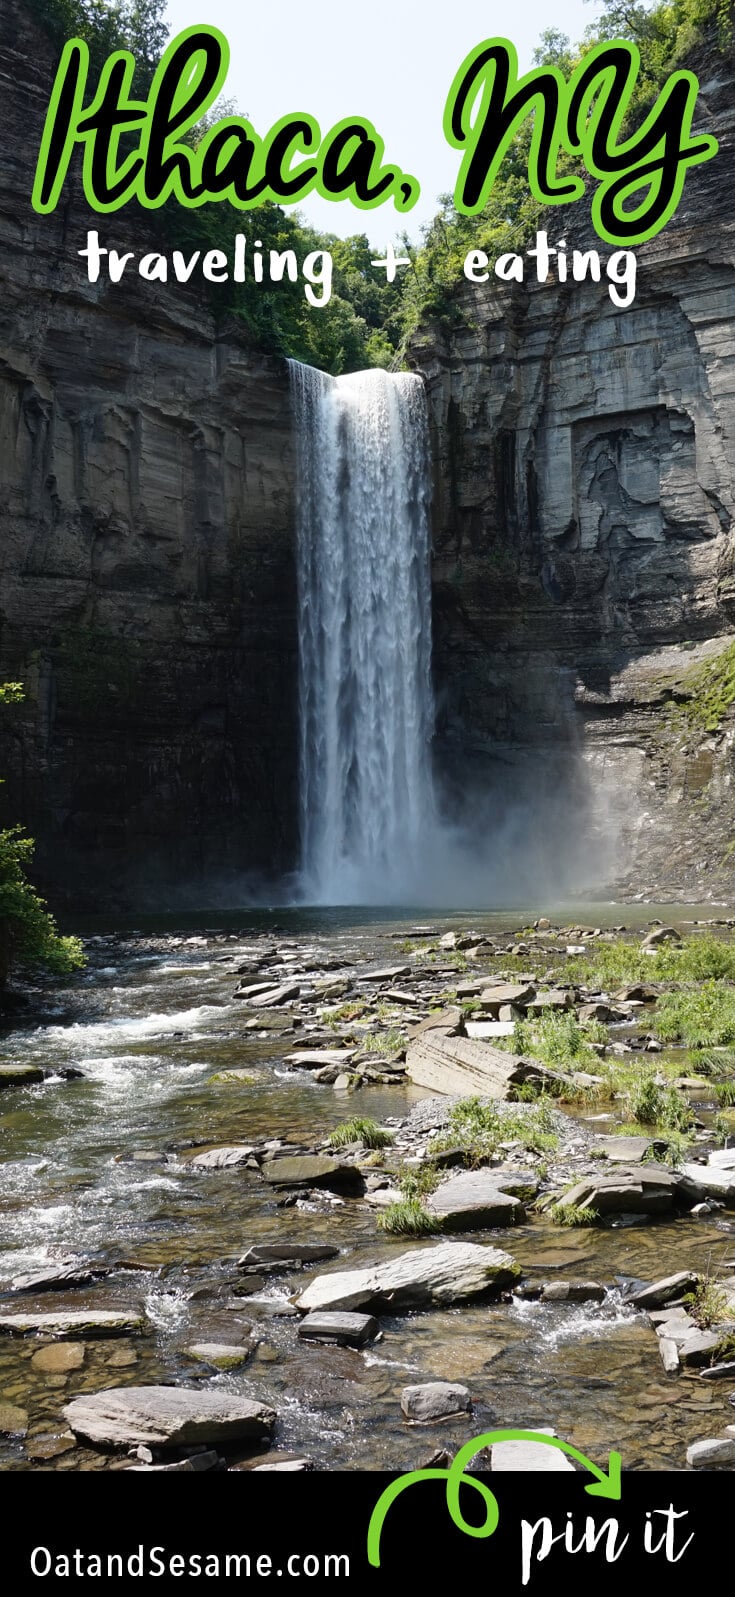 Waterfall in Ithaca NY